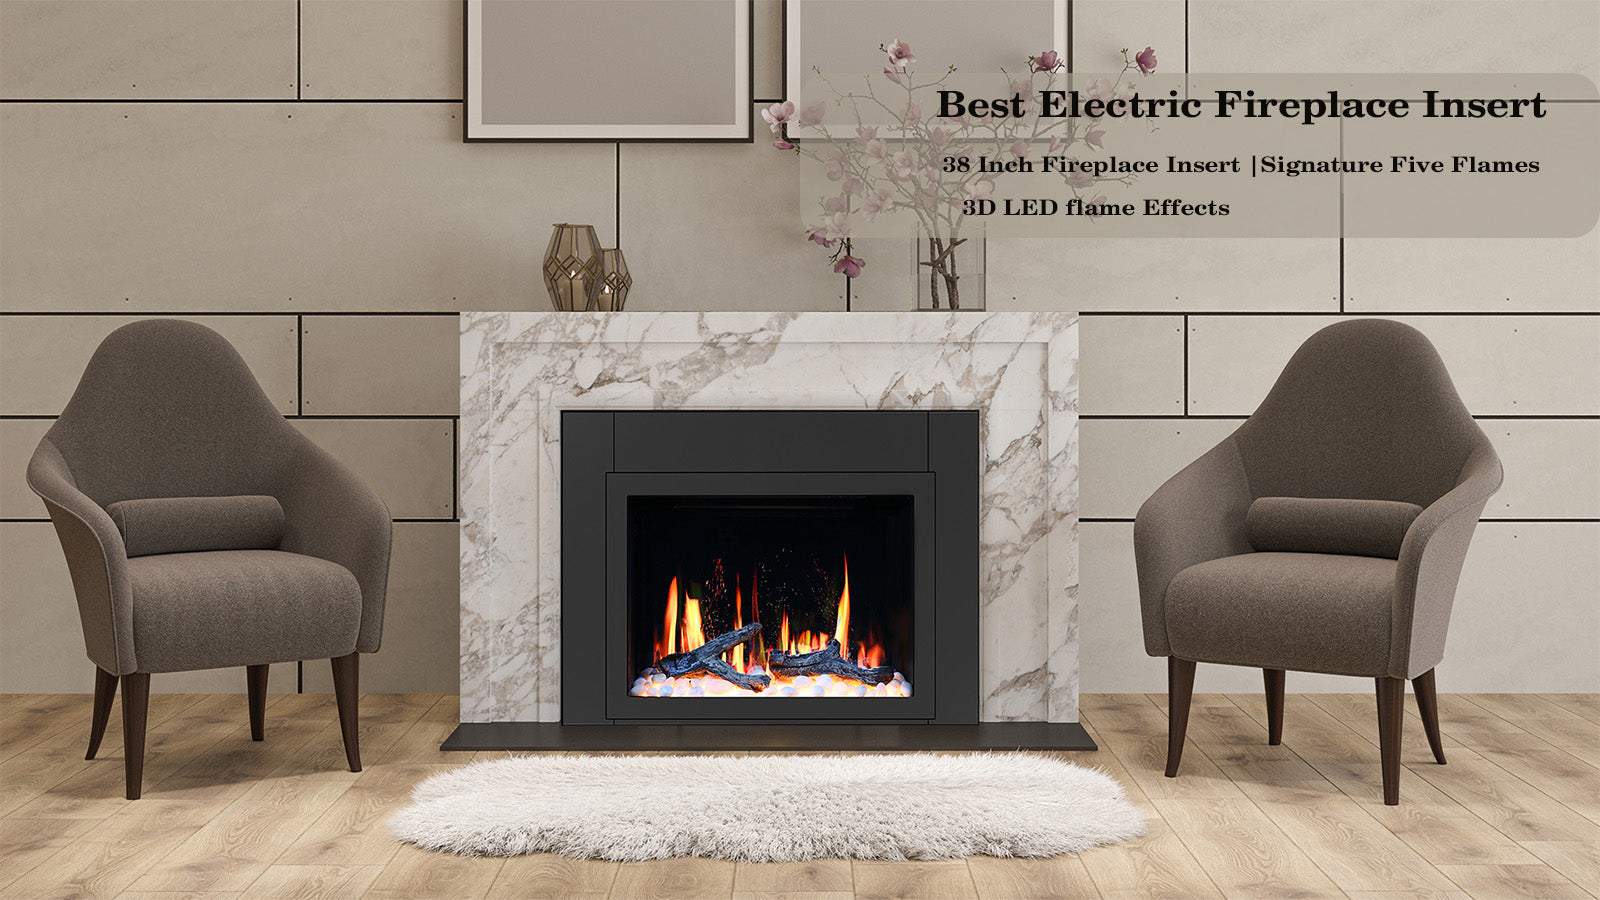 Zopaflame 38 inch smart fireplace insert for livingroom